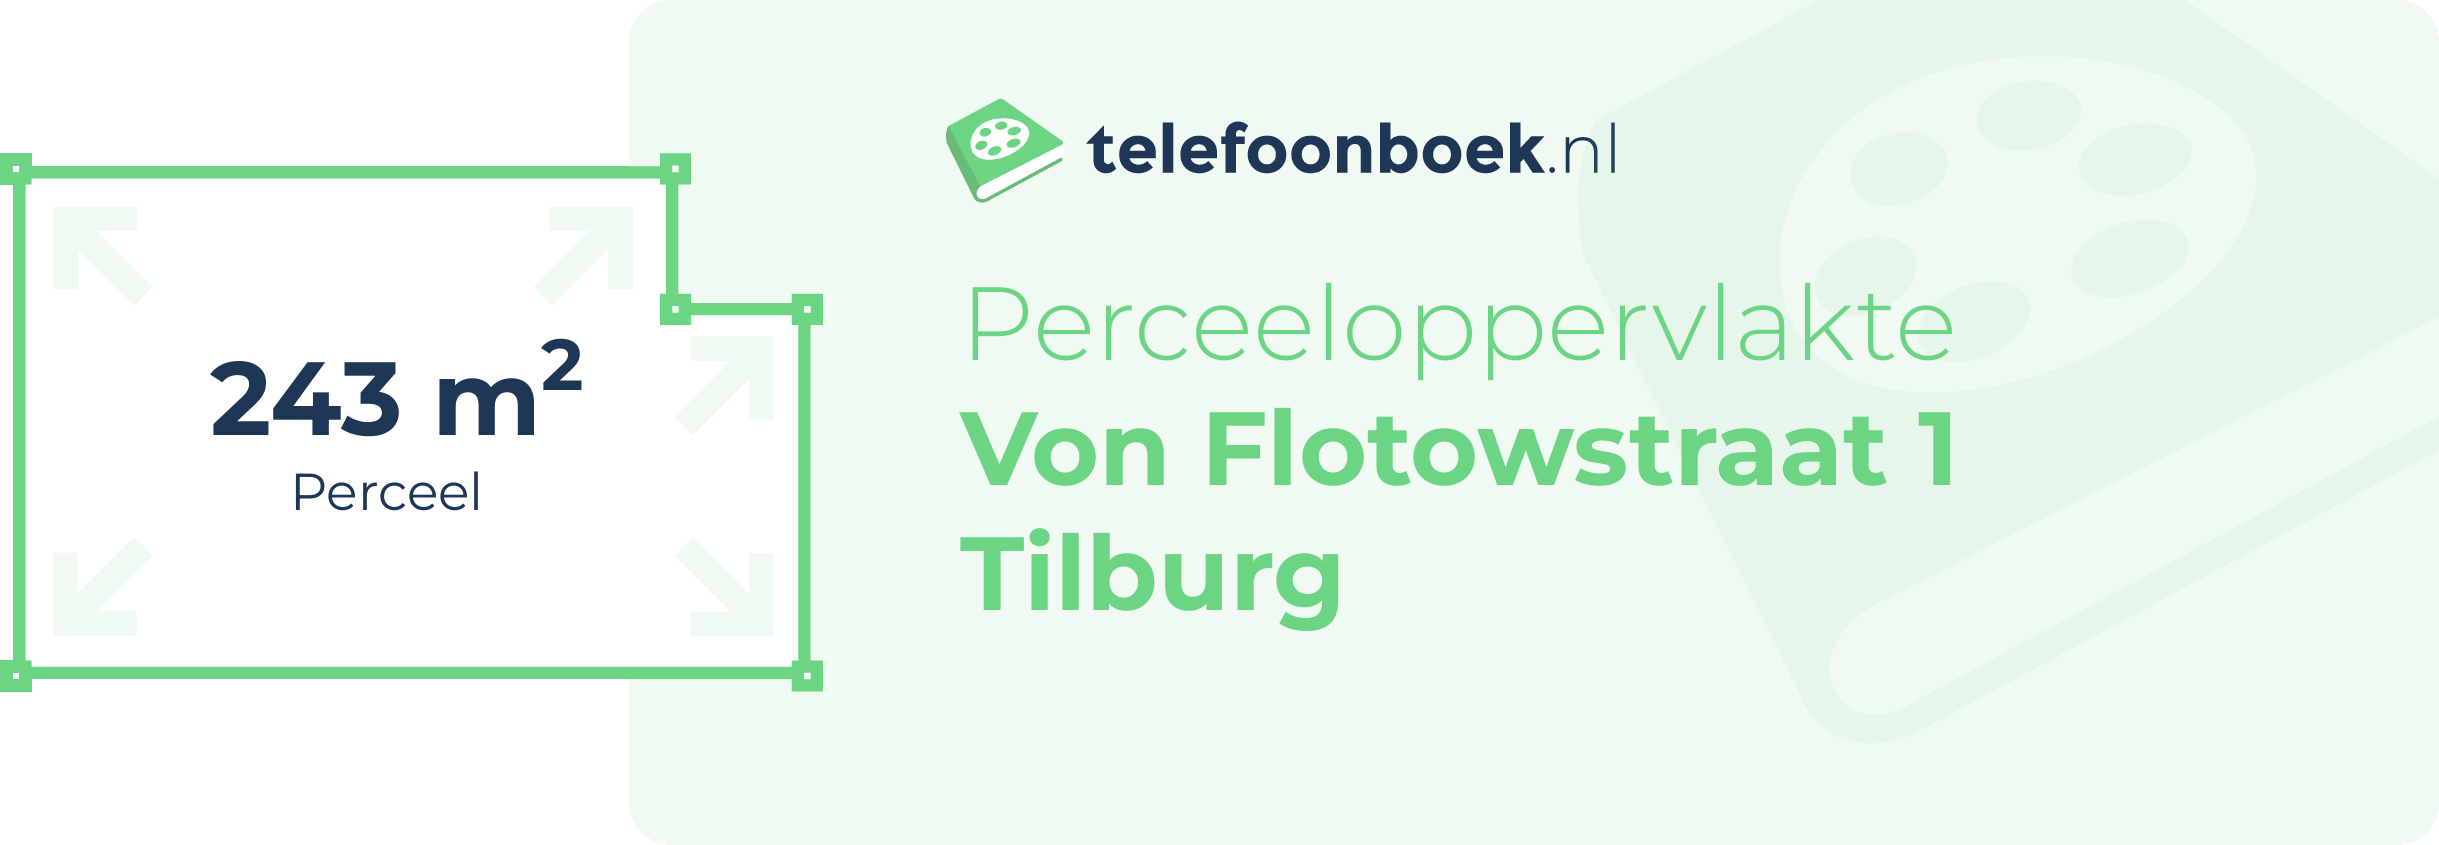 Perceeloppervlakte Von Flotowstraat 1 Tilburg